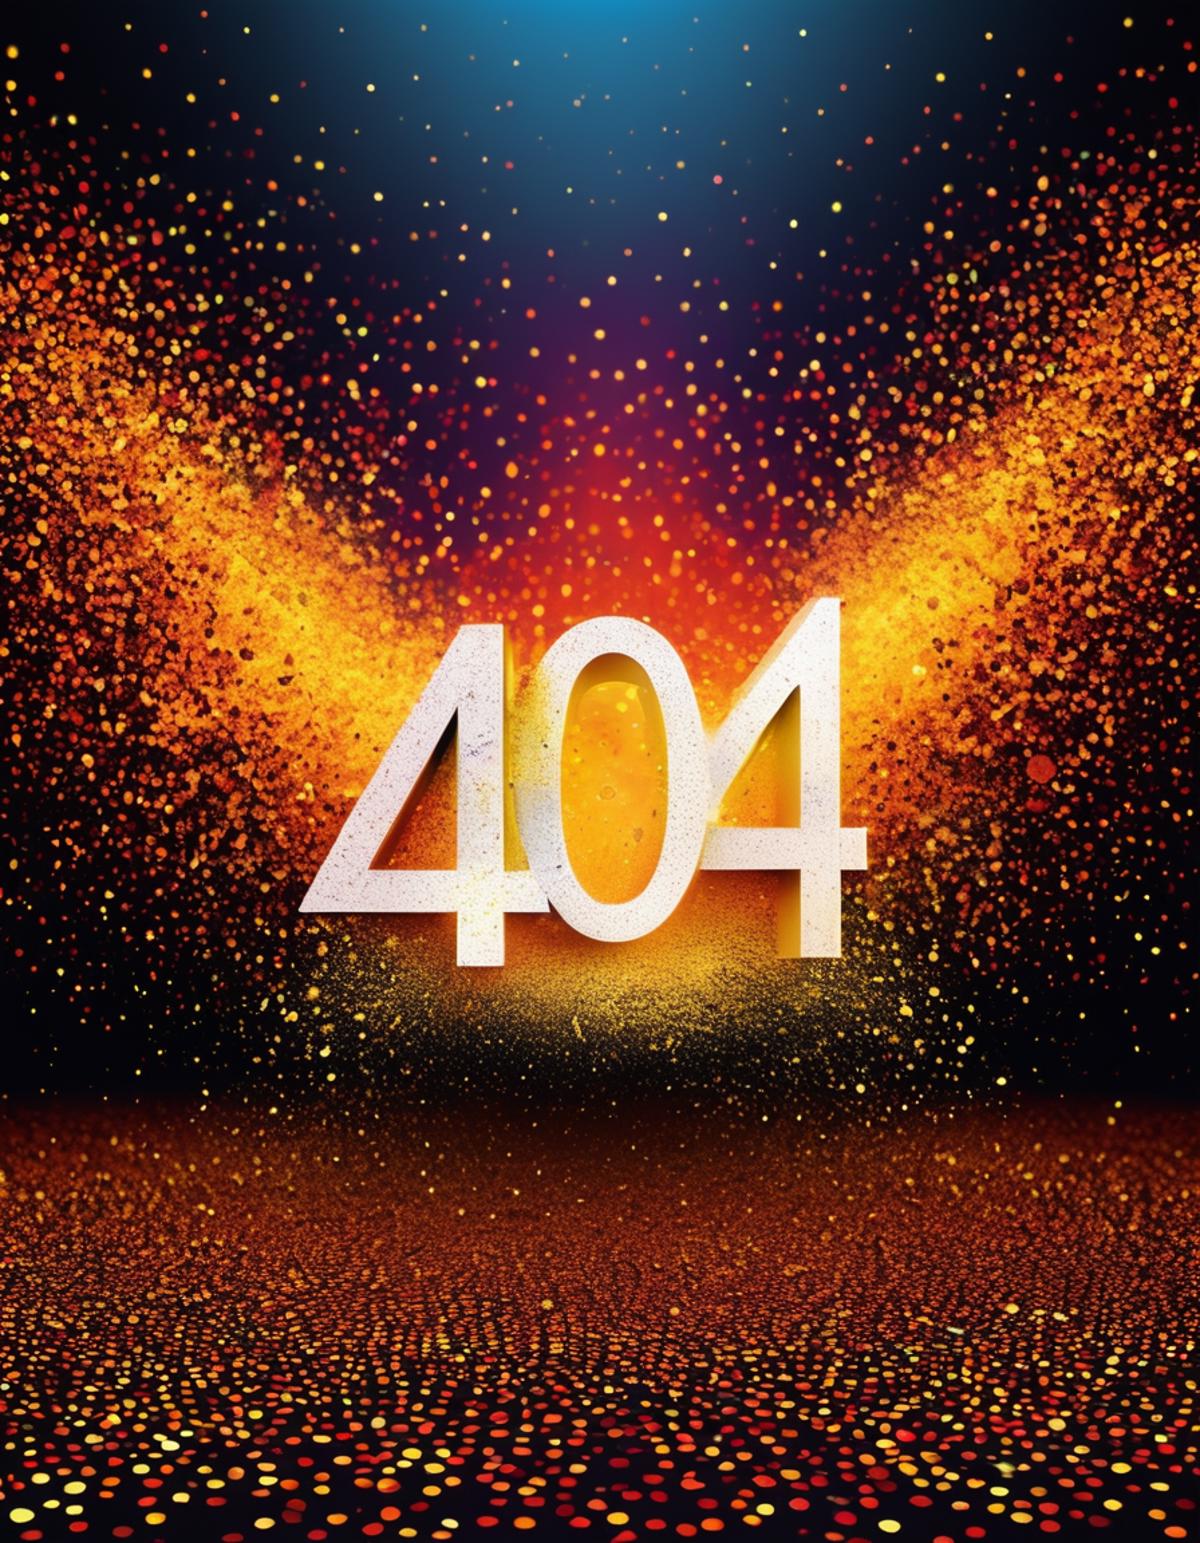 404 CivitAI Toolkit image by idle